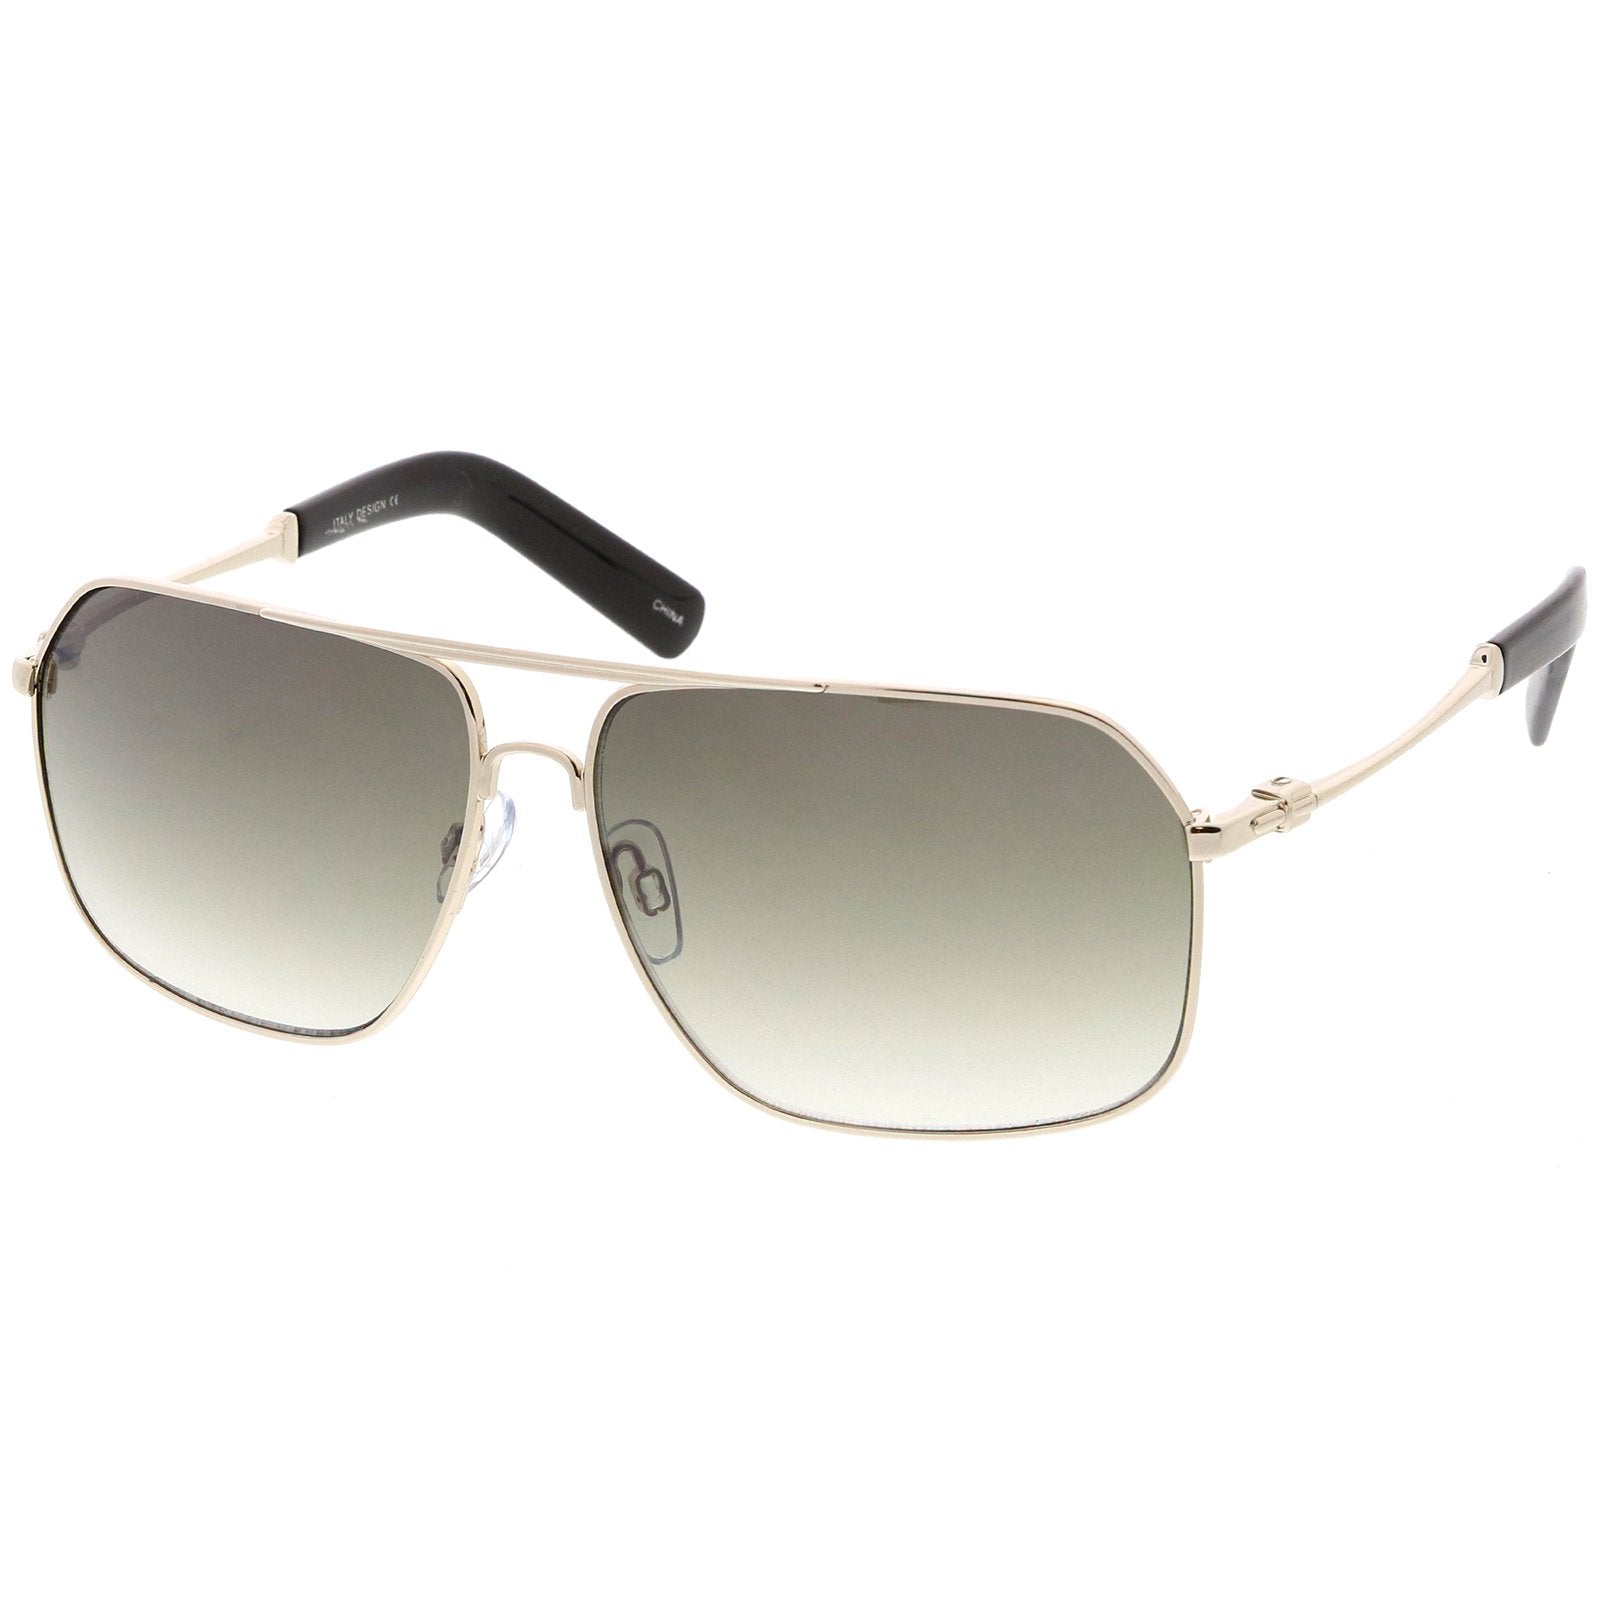 Premium Asian Fit Sports Square Aviator Sunglasses - zeroUV